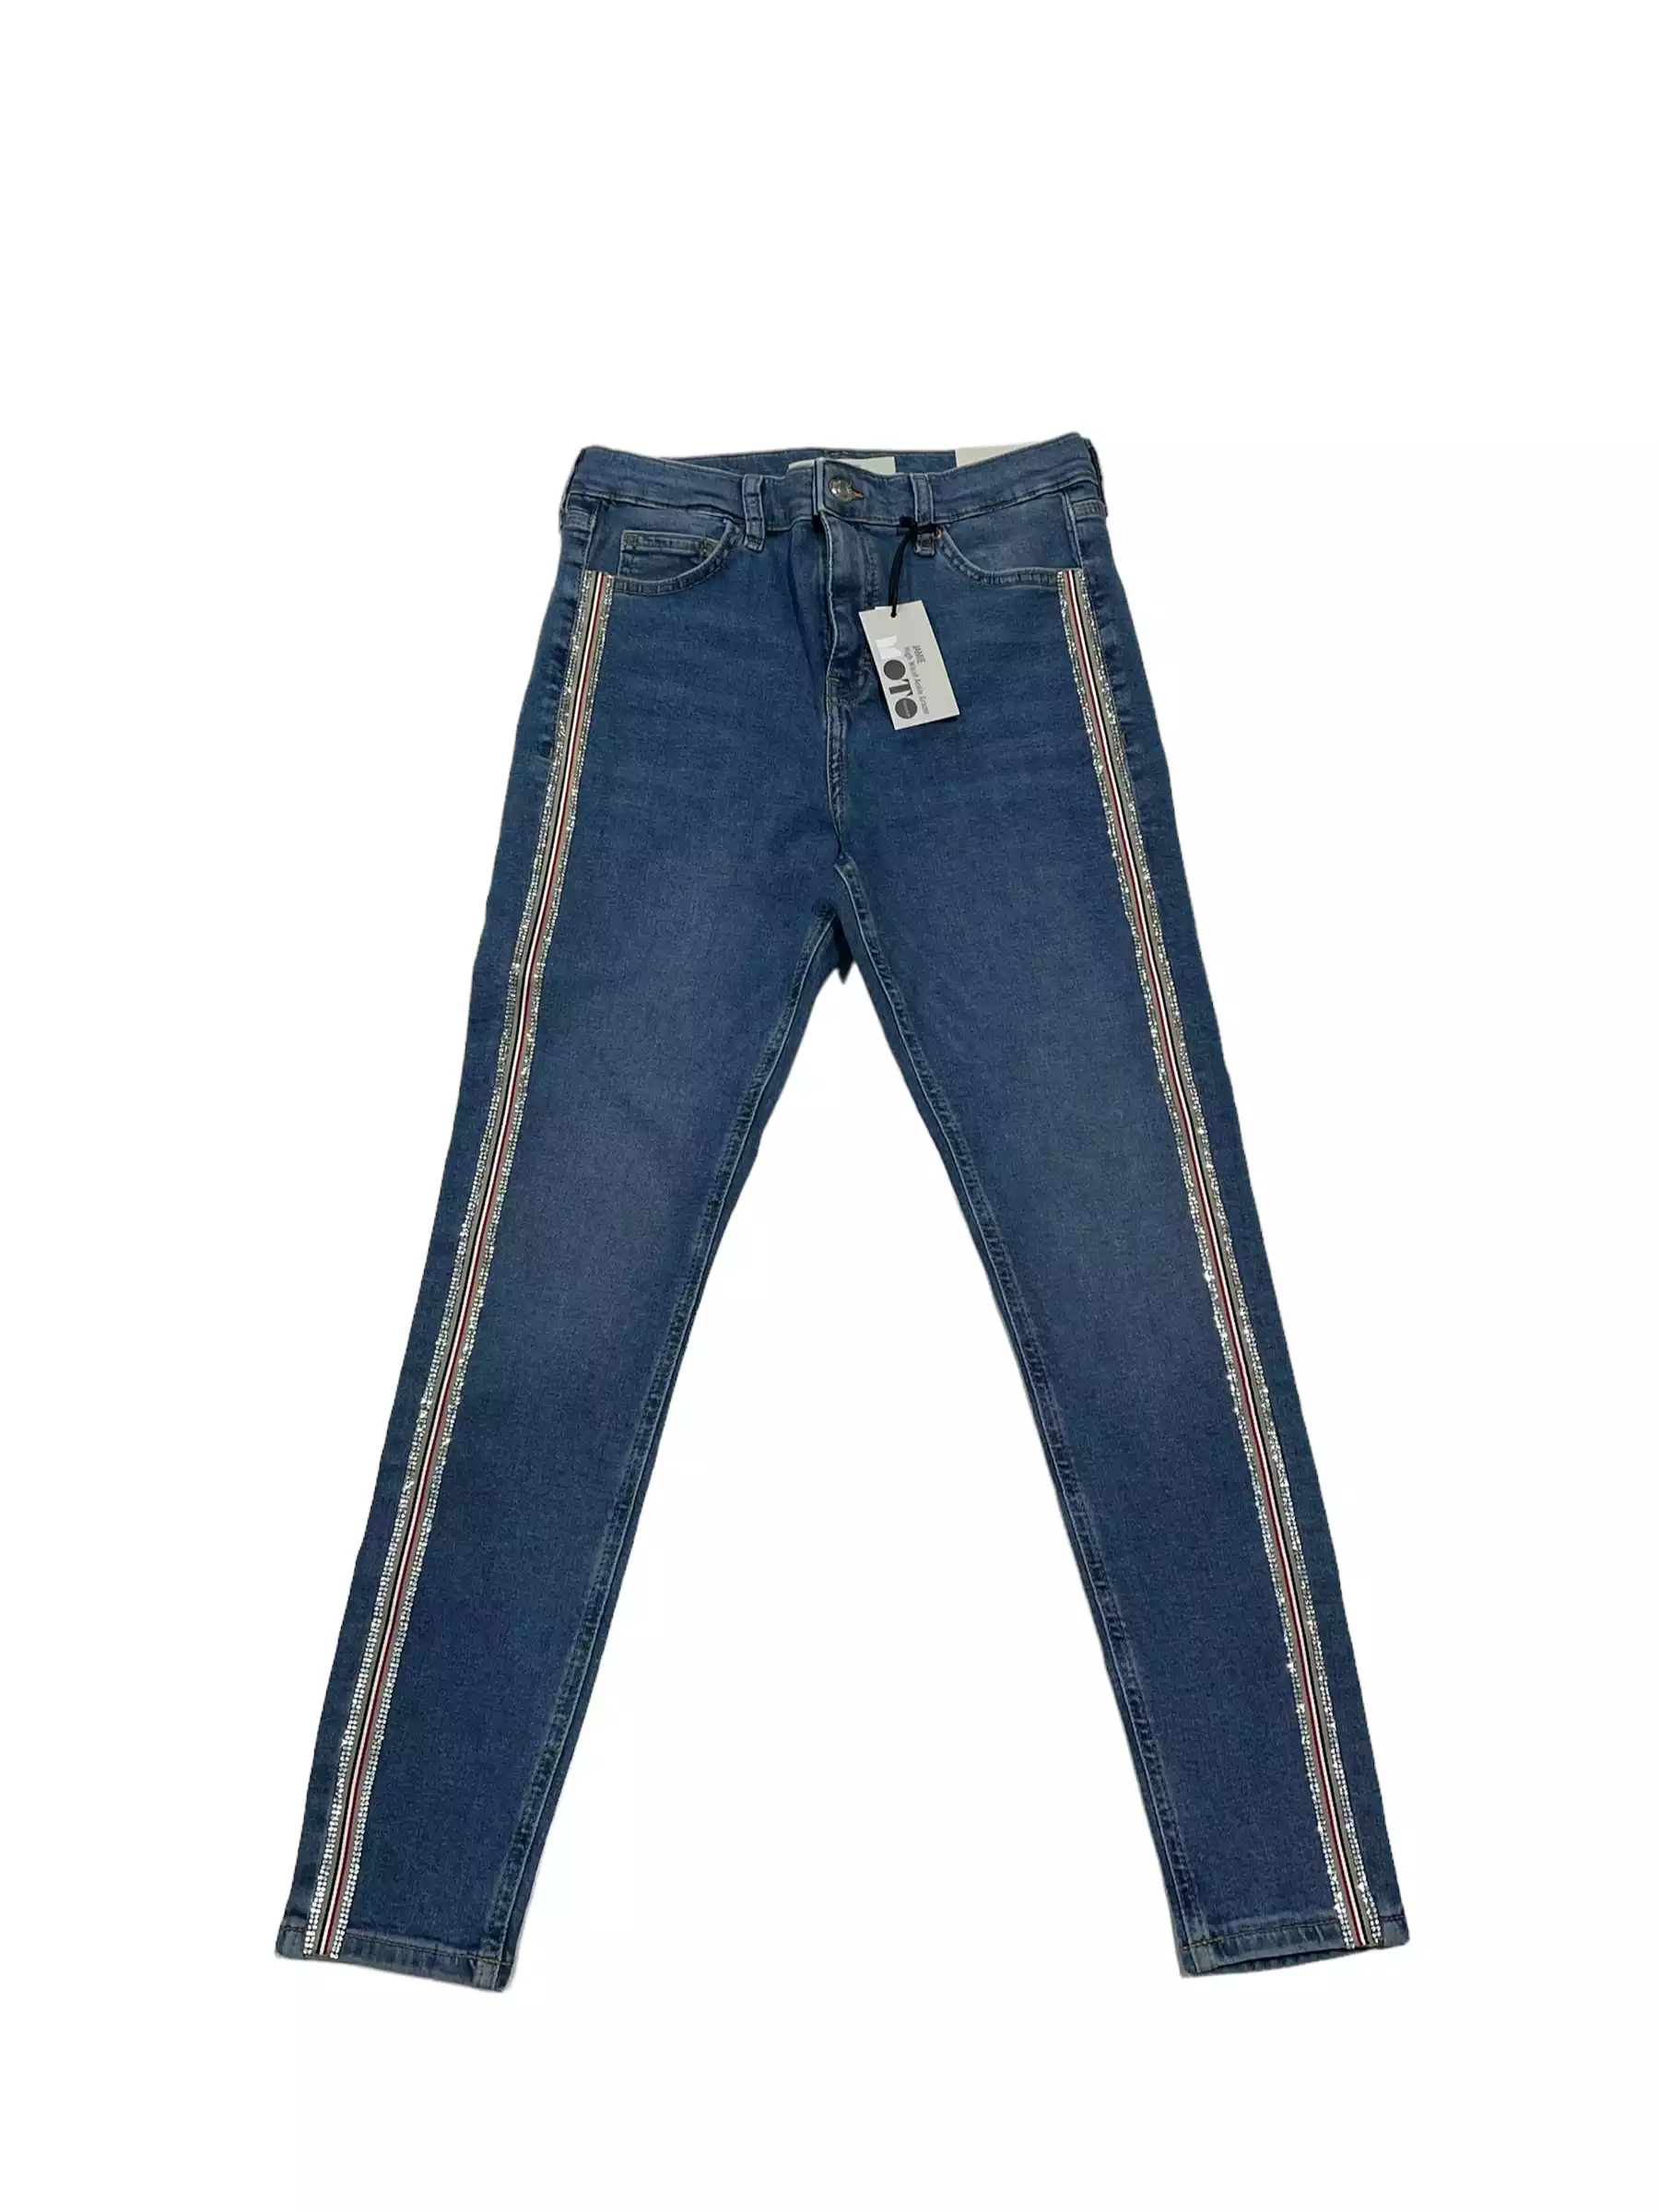 Denim Jeans by Topshop